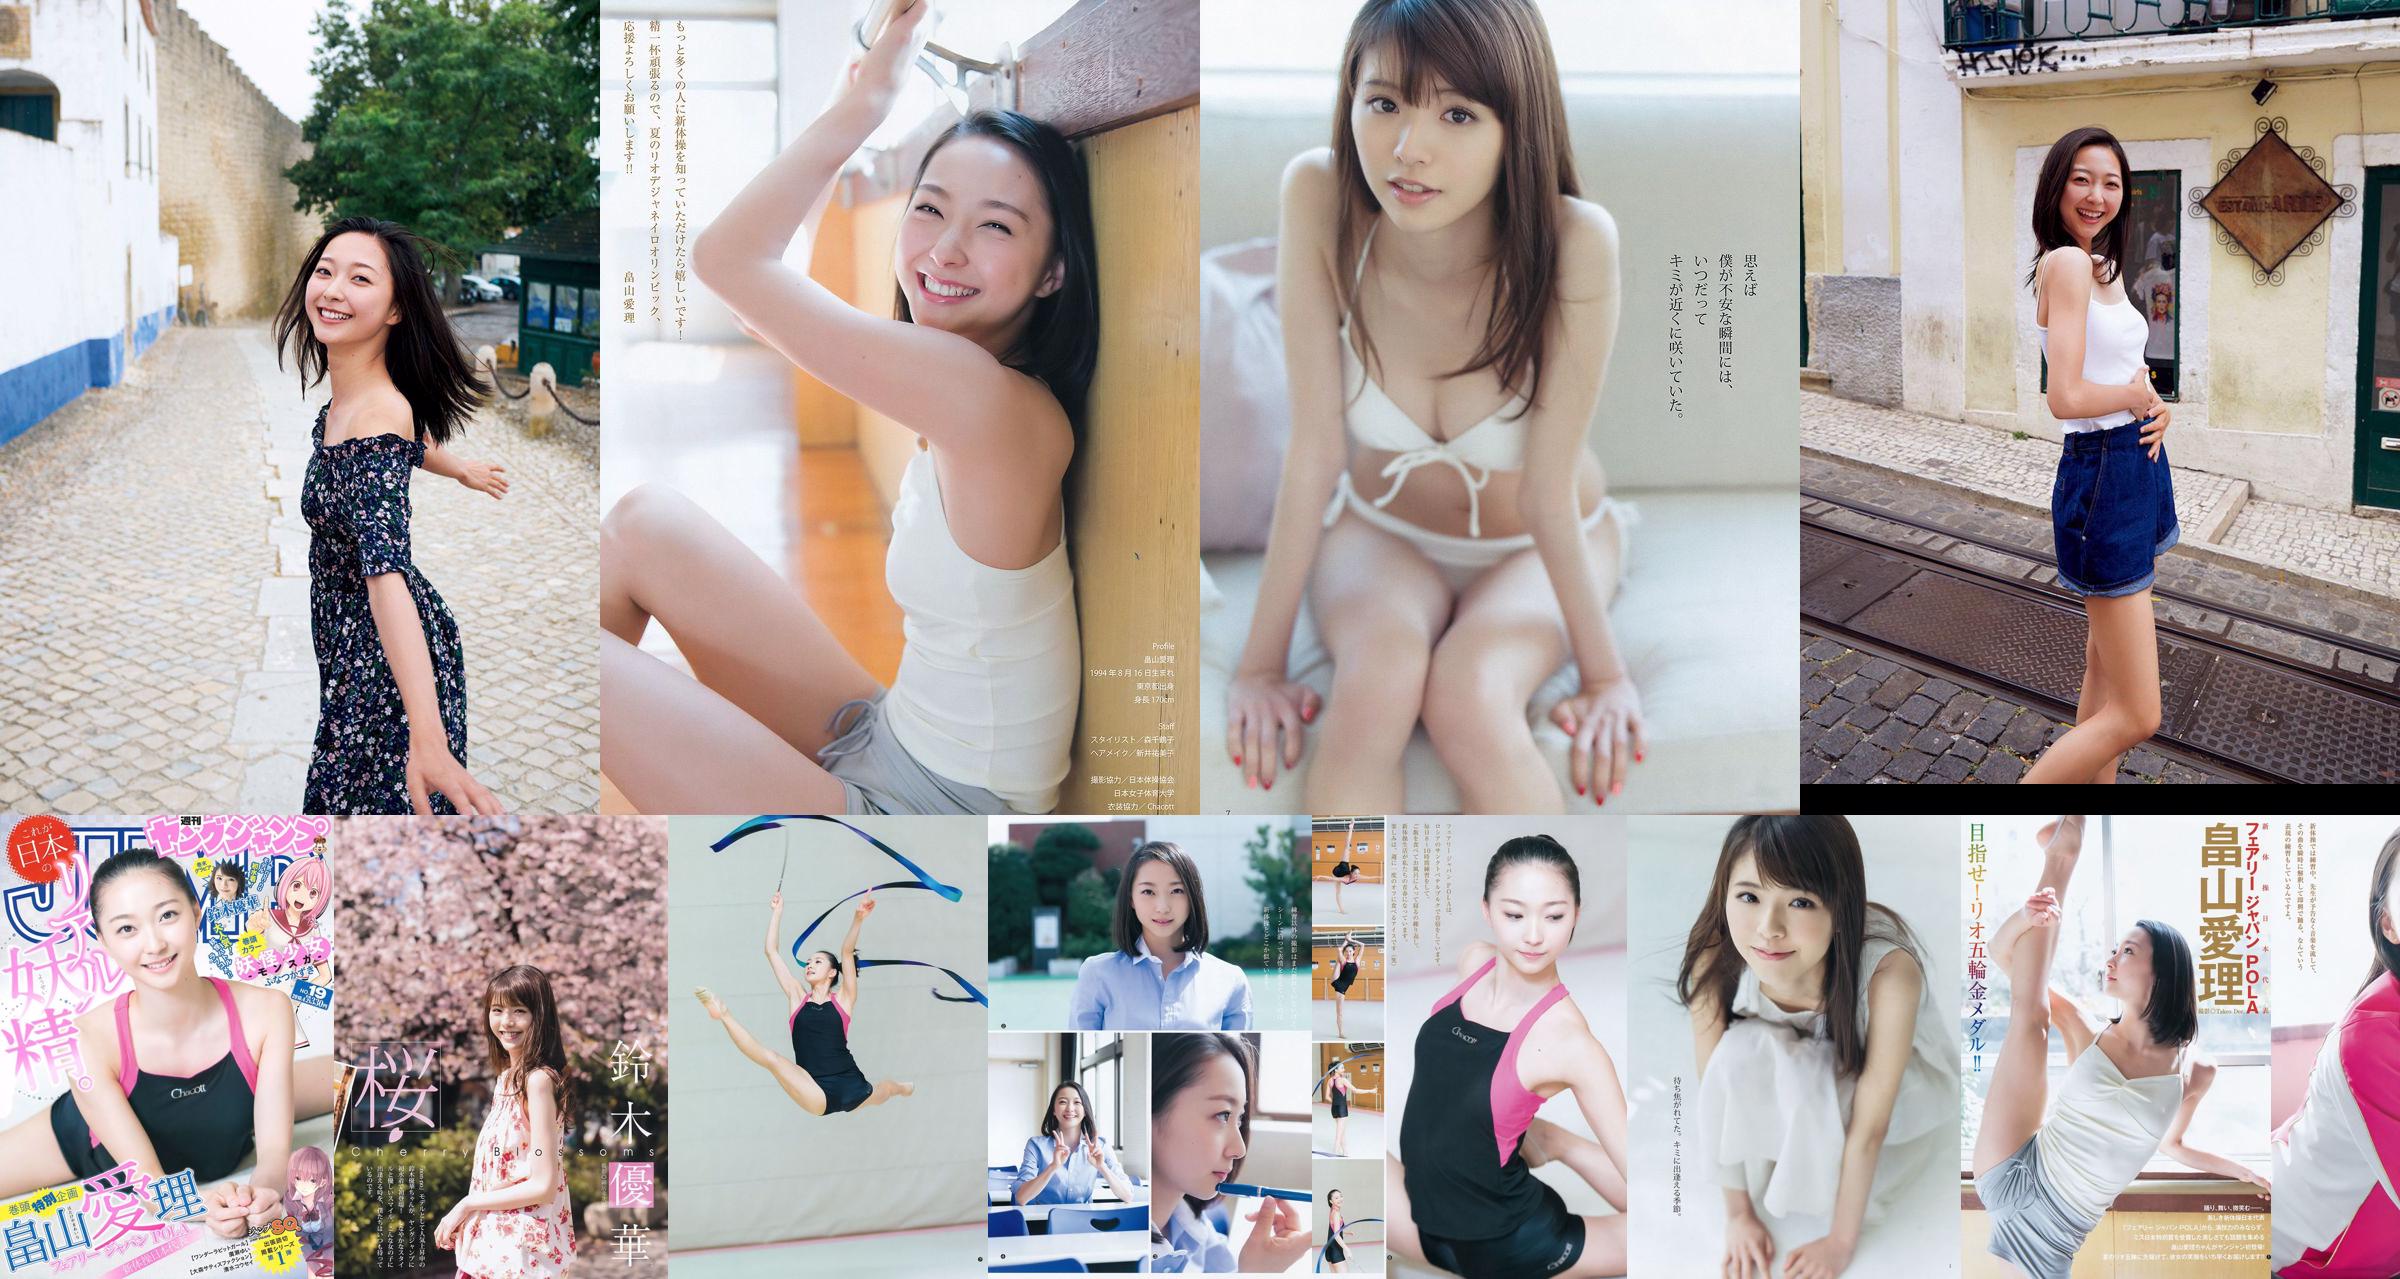 [ENTAME] Mai Shiraishi Nanase Nishino Rena Shimada Yui Takano Edición de marzo de 2014 Fotografía No.3b8c01 Página 3